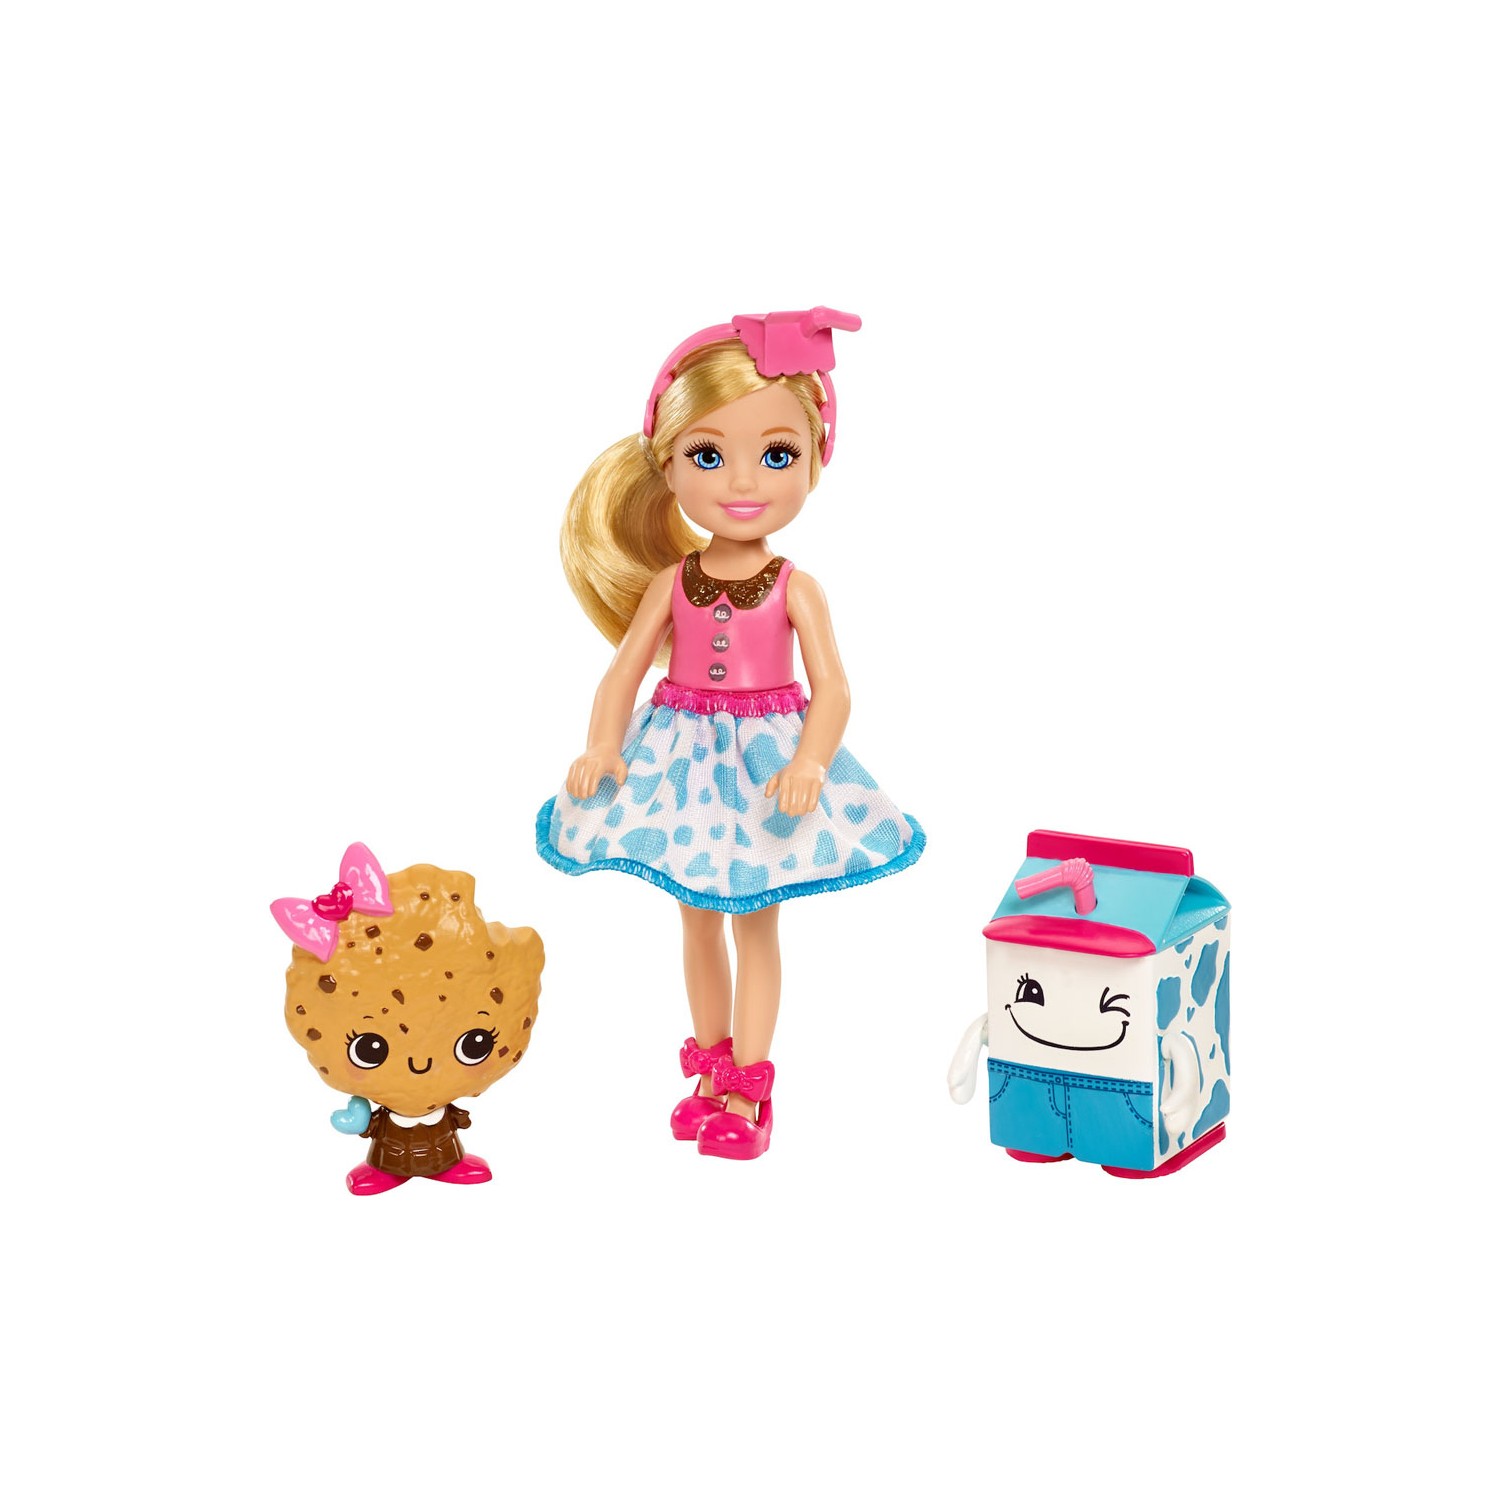 Кукла Barbie Dreamtopia Chelsea and its 2 Cute Friends Fdj11 cute cute клиппер средний 60 мм